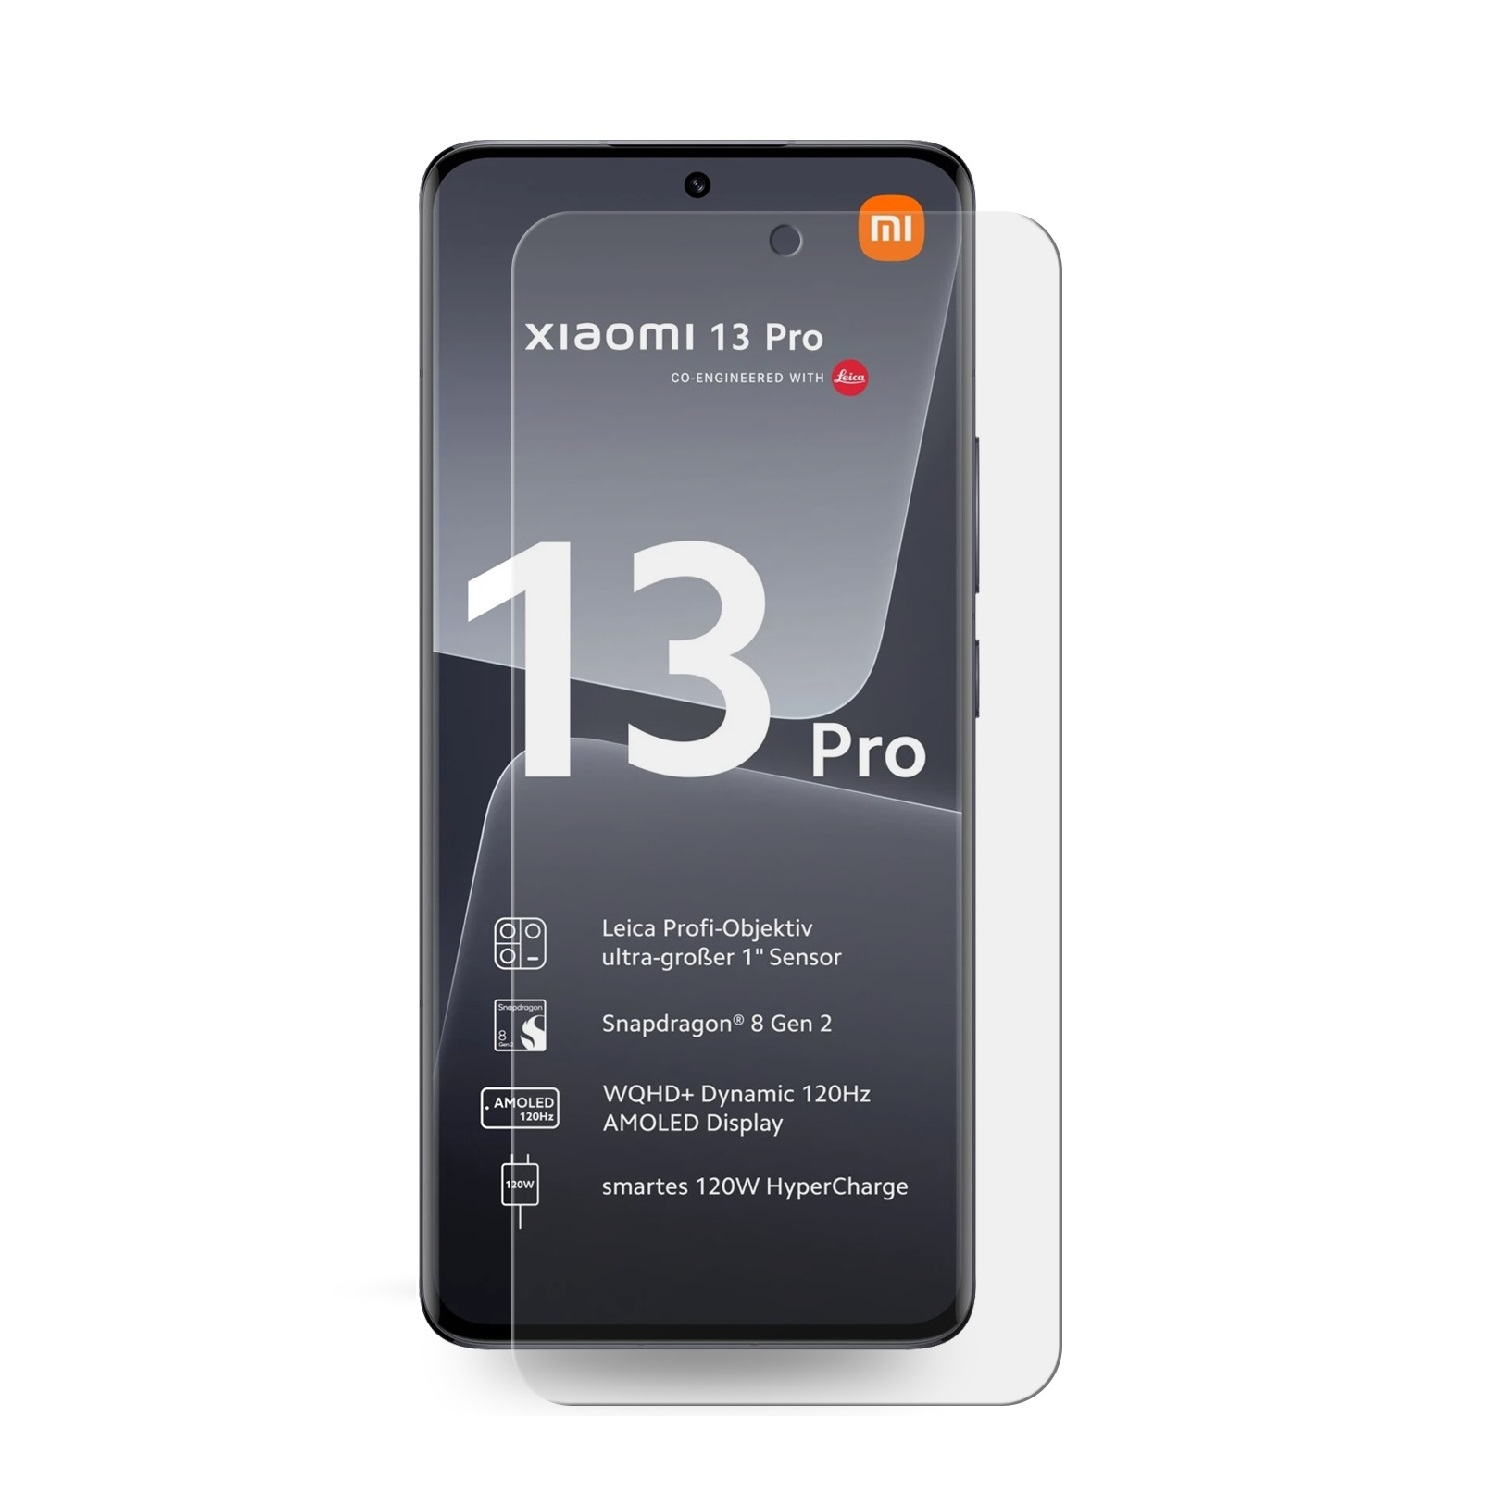 Panzerfolie HD KLAR Xiaomi Pro) PROTECTORKING CURVED Displayschutzfolie(für Hydrogel 2x 13 FULL